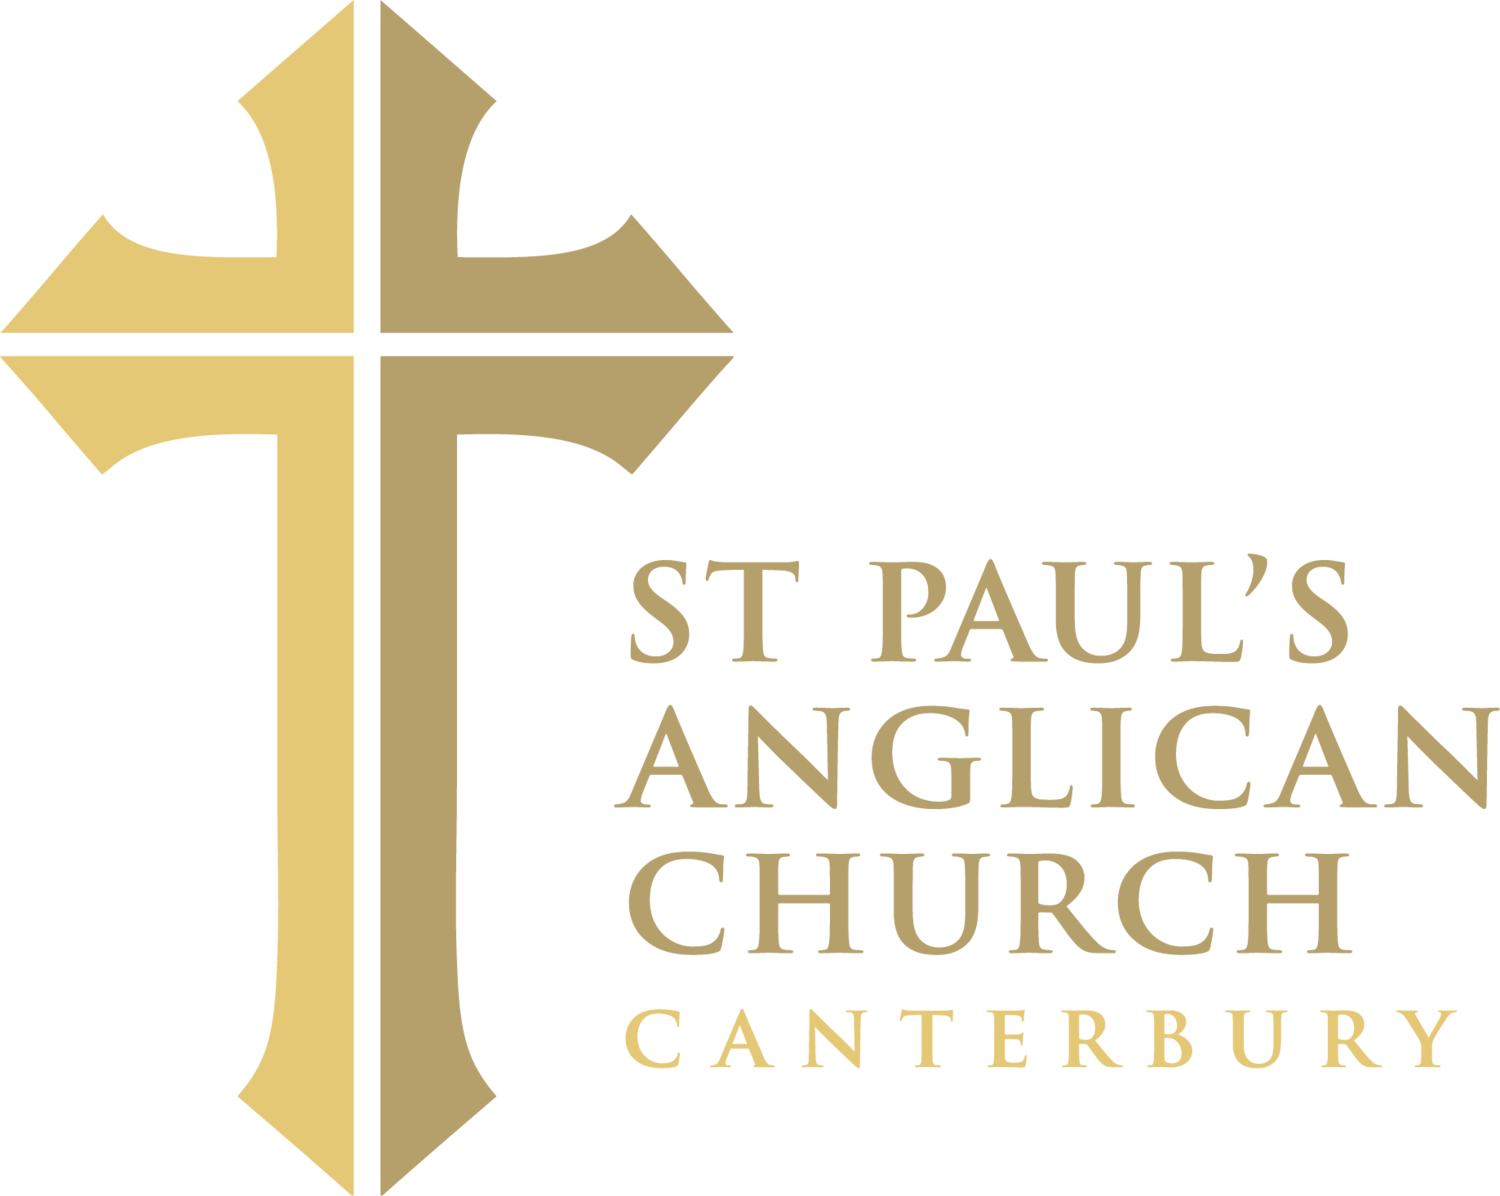 St Paul's Anglican Church Canterbury